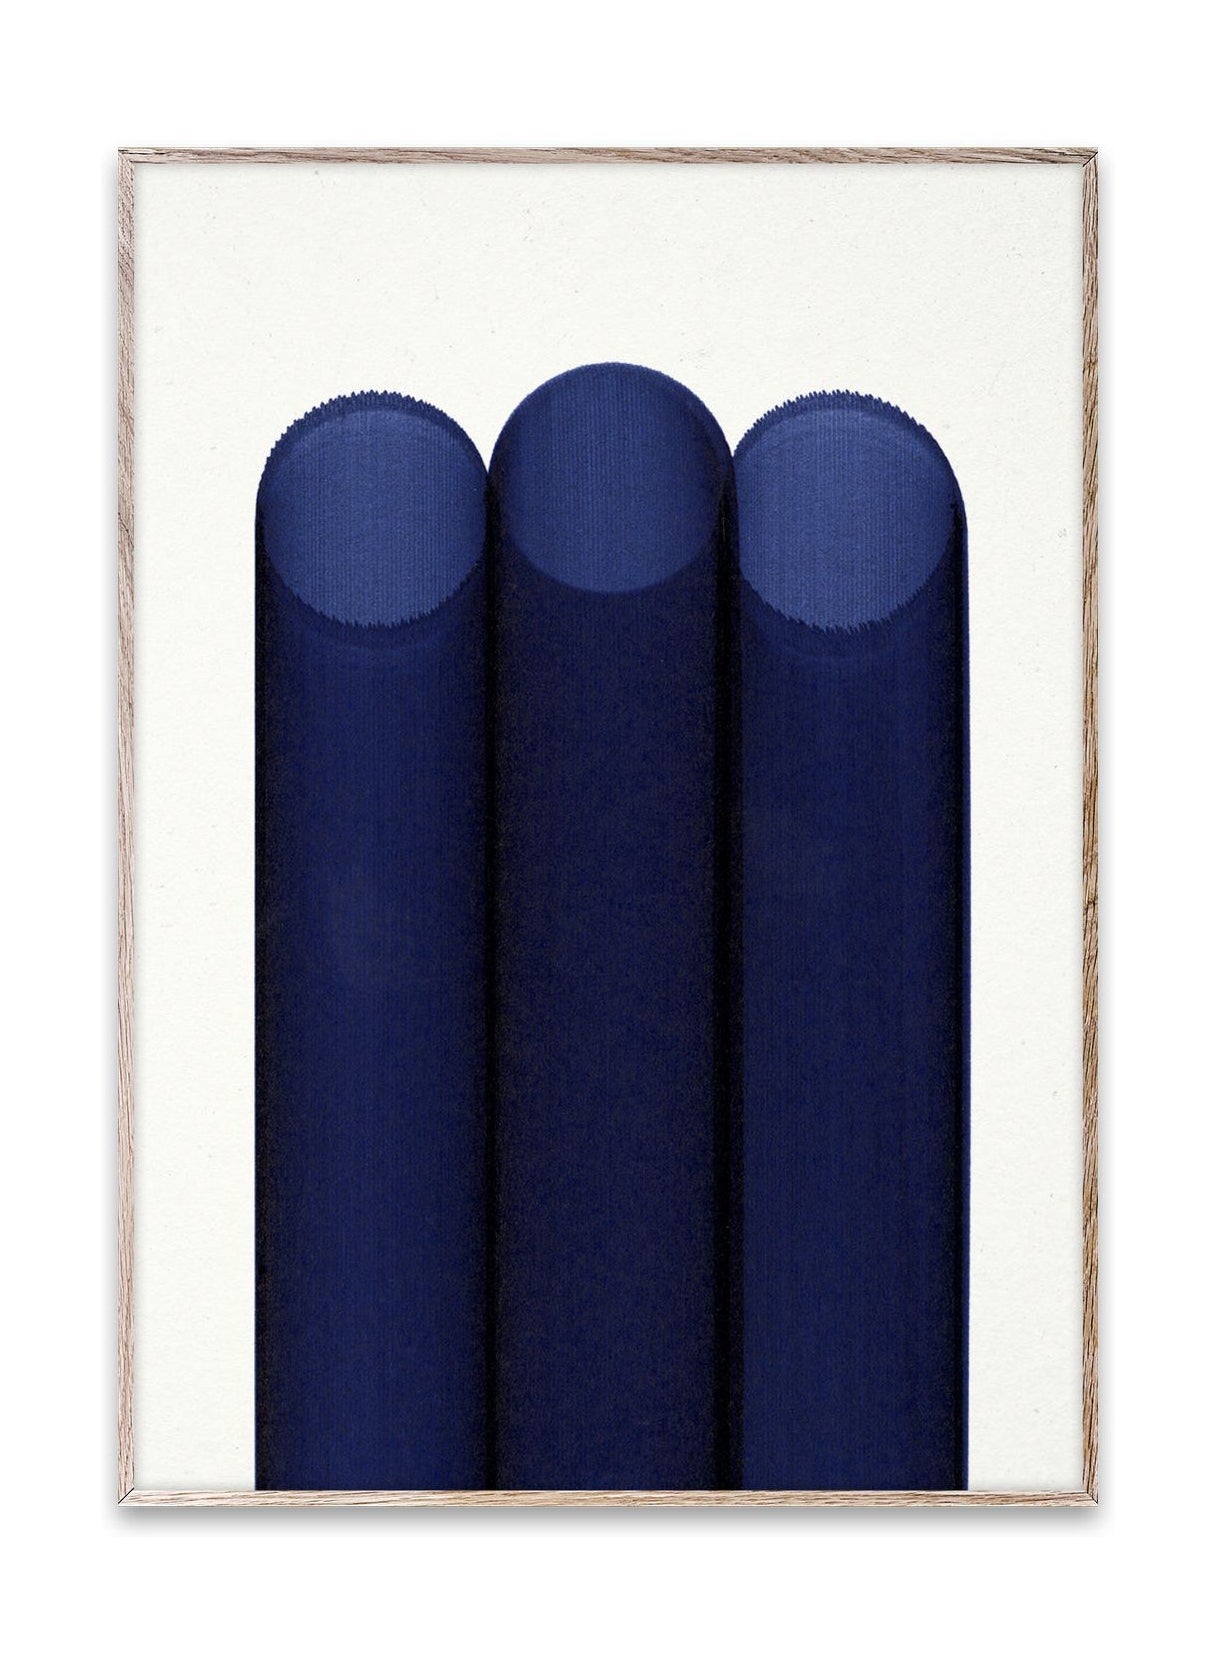 Papierkollektivblau -Rohrposter, 50 x 70 cm